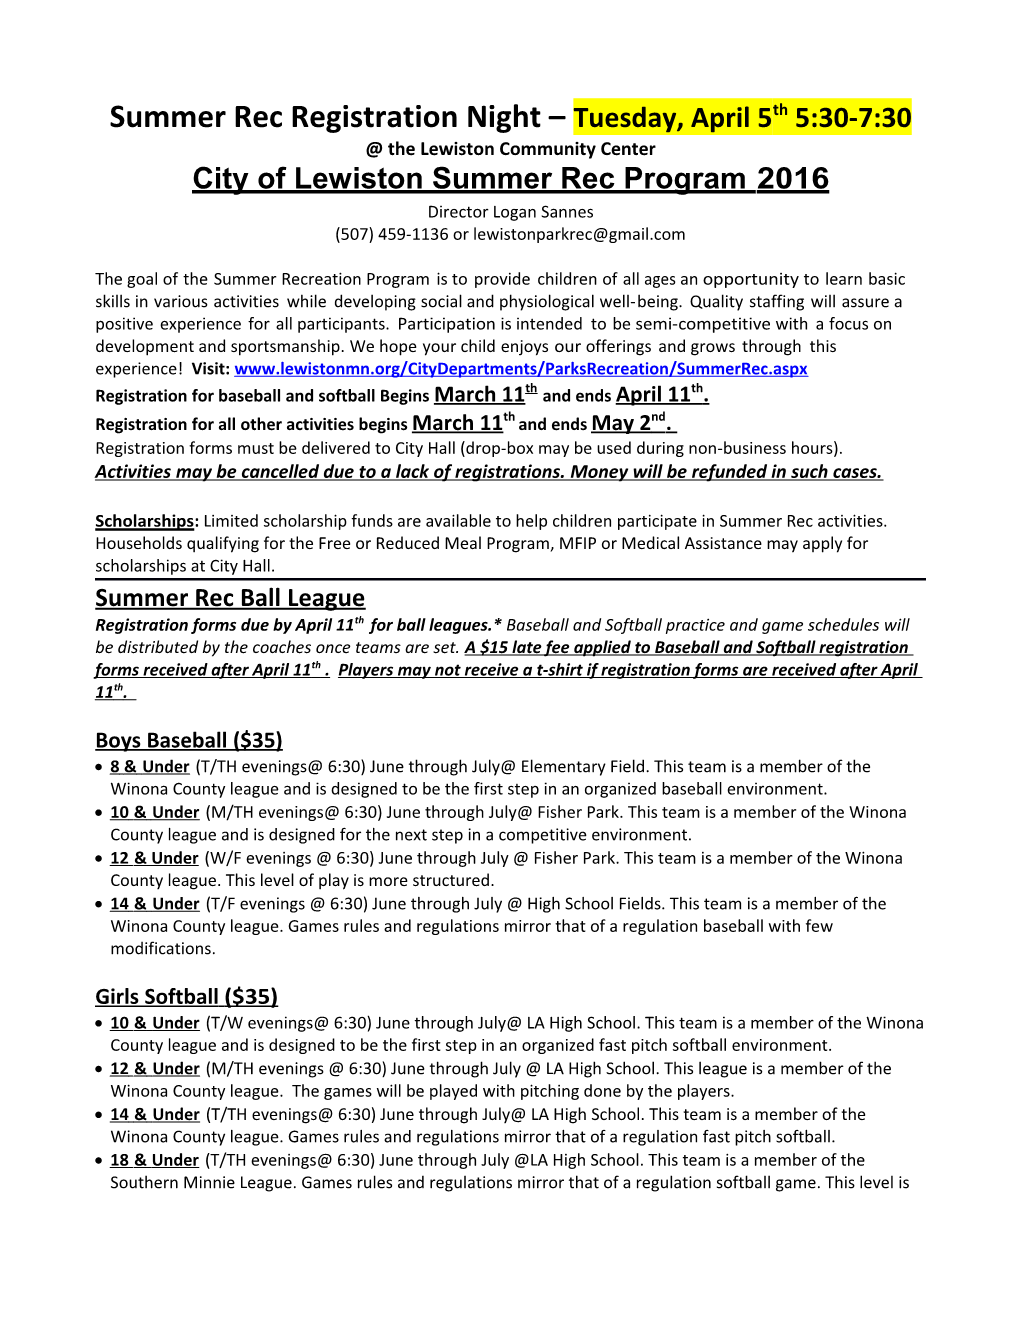 City of Lewiston Summer Rec Program2016